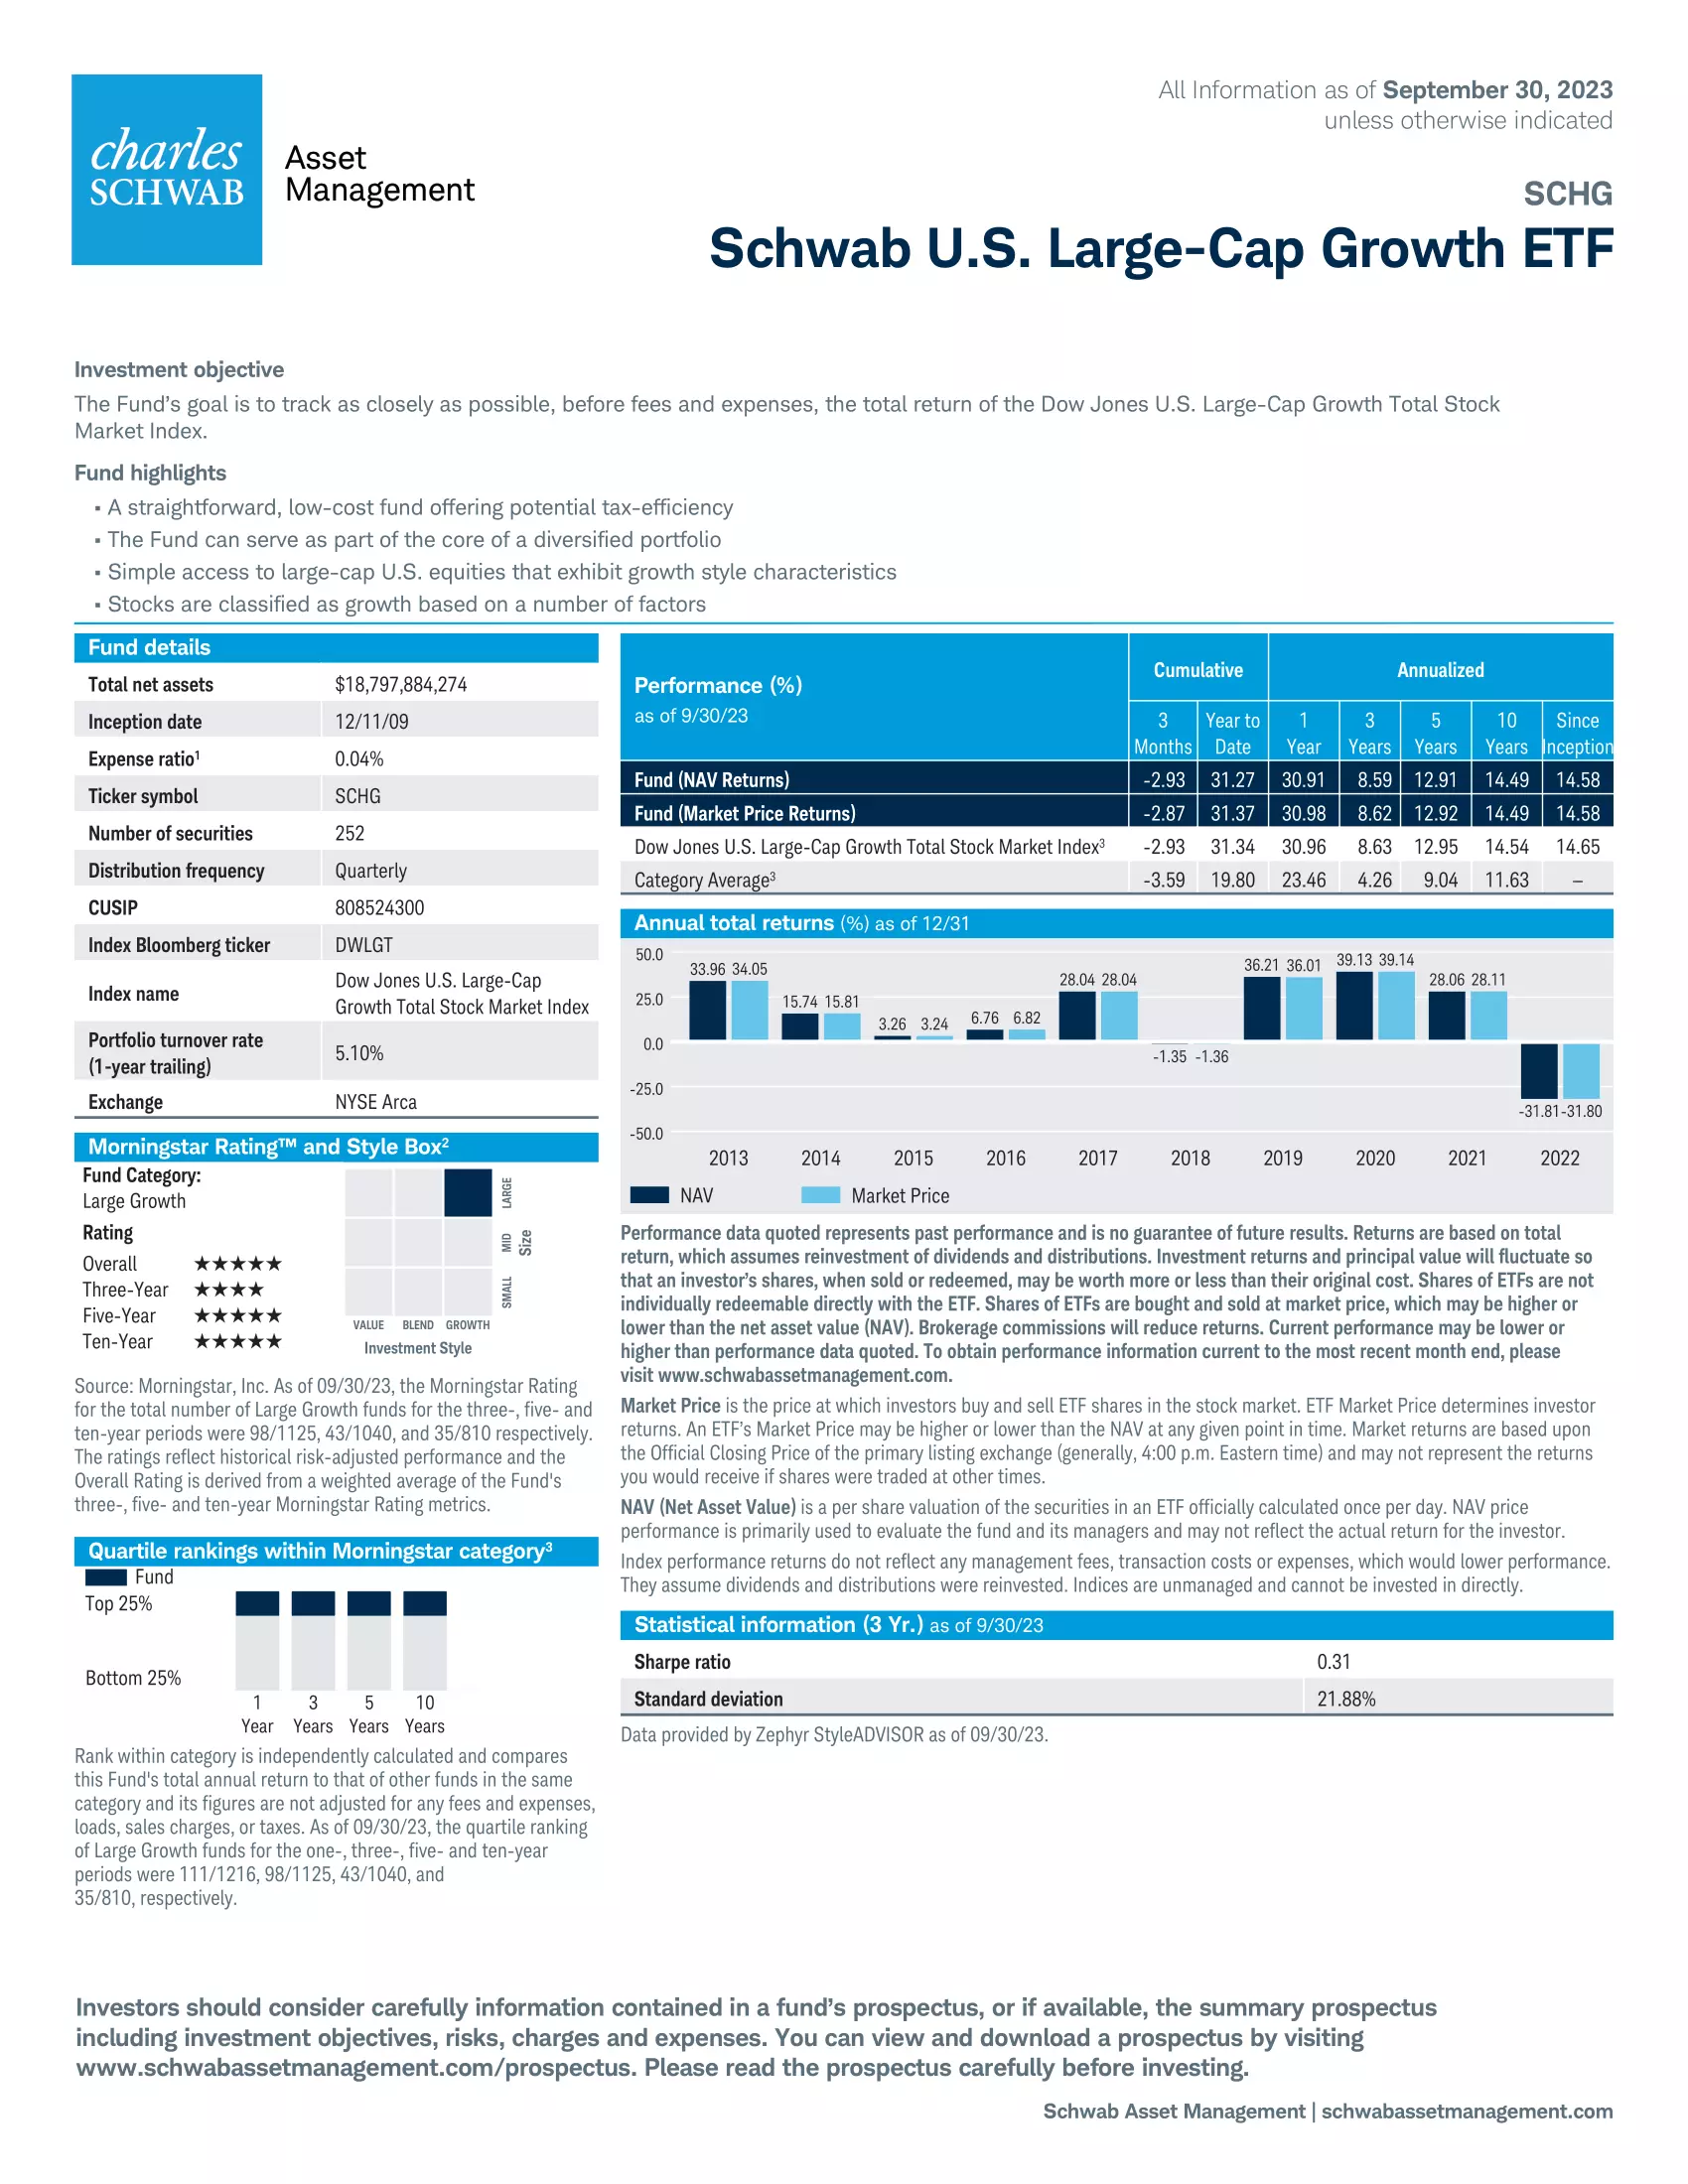 SCHG: Schwab U.S. Large-Cap Growth ETF